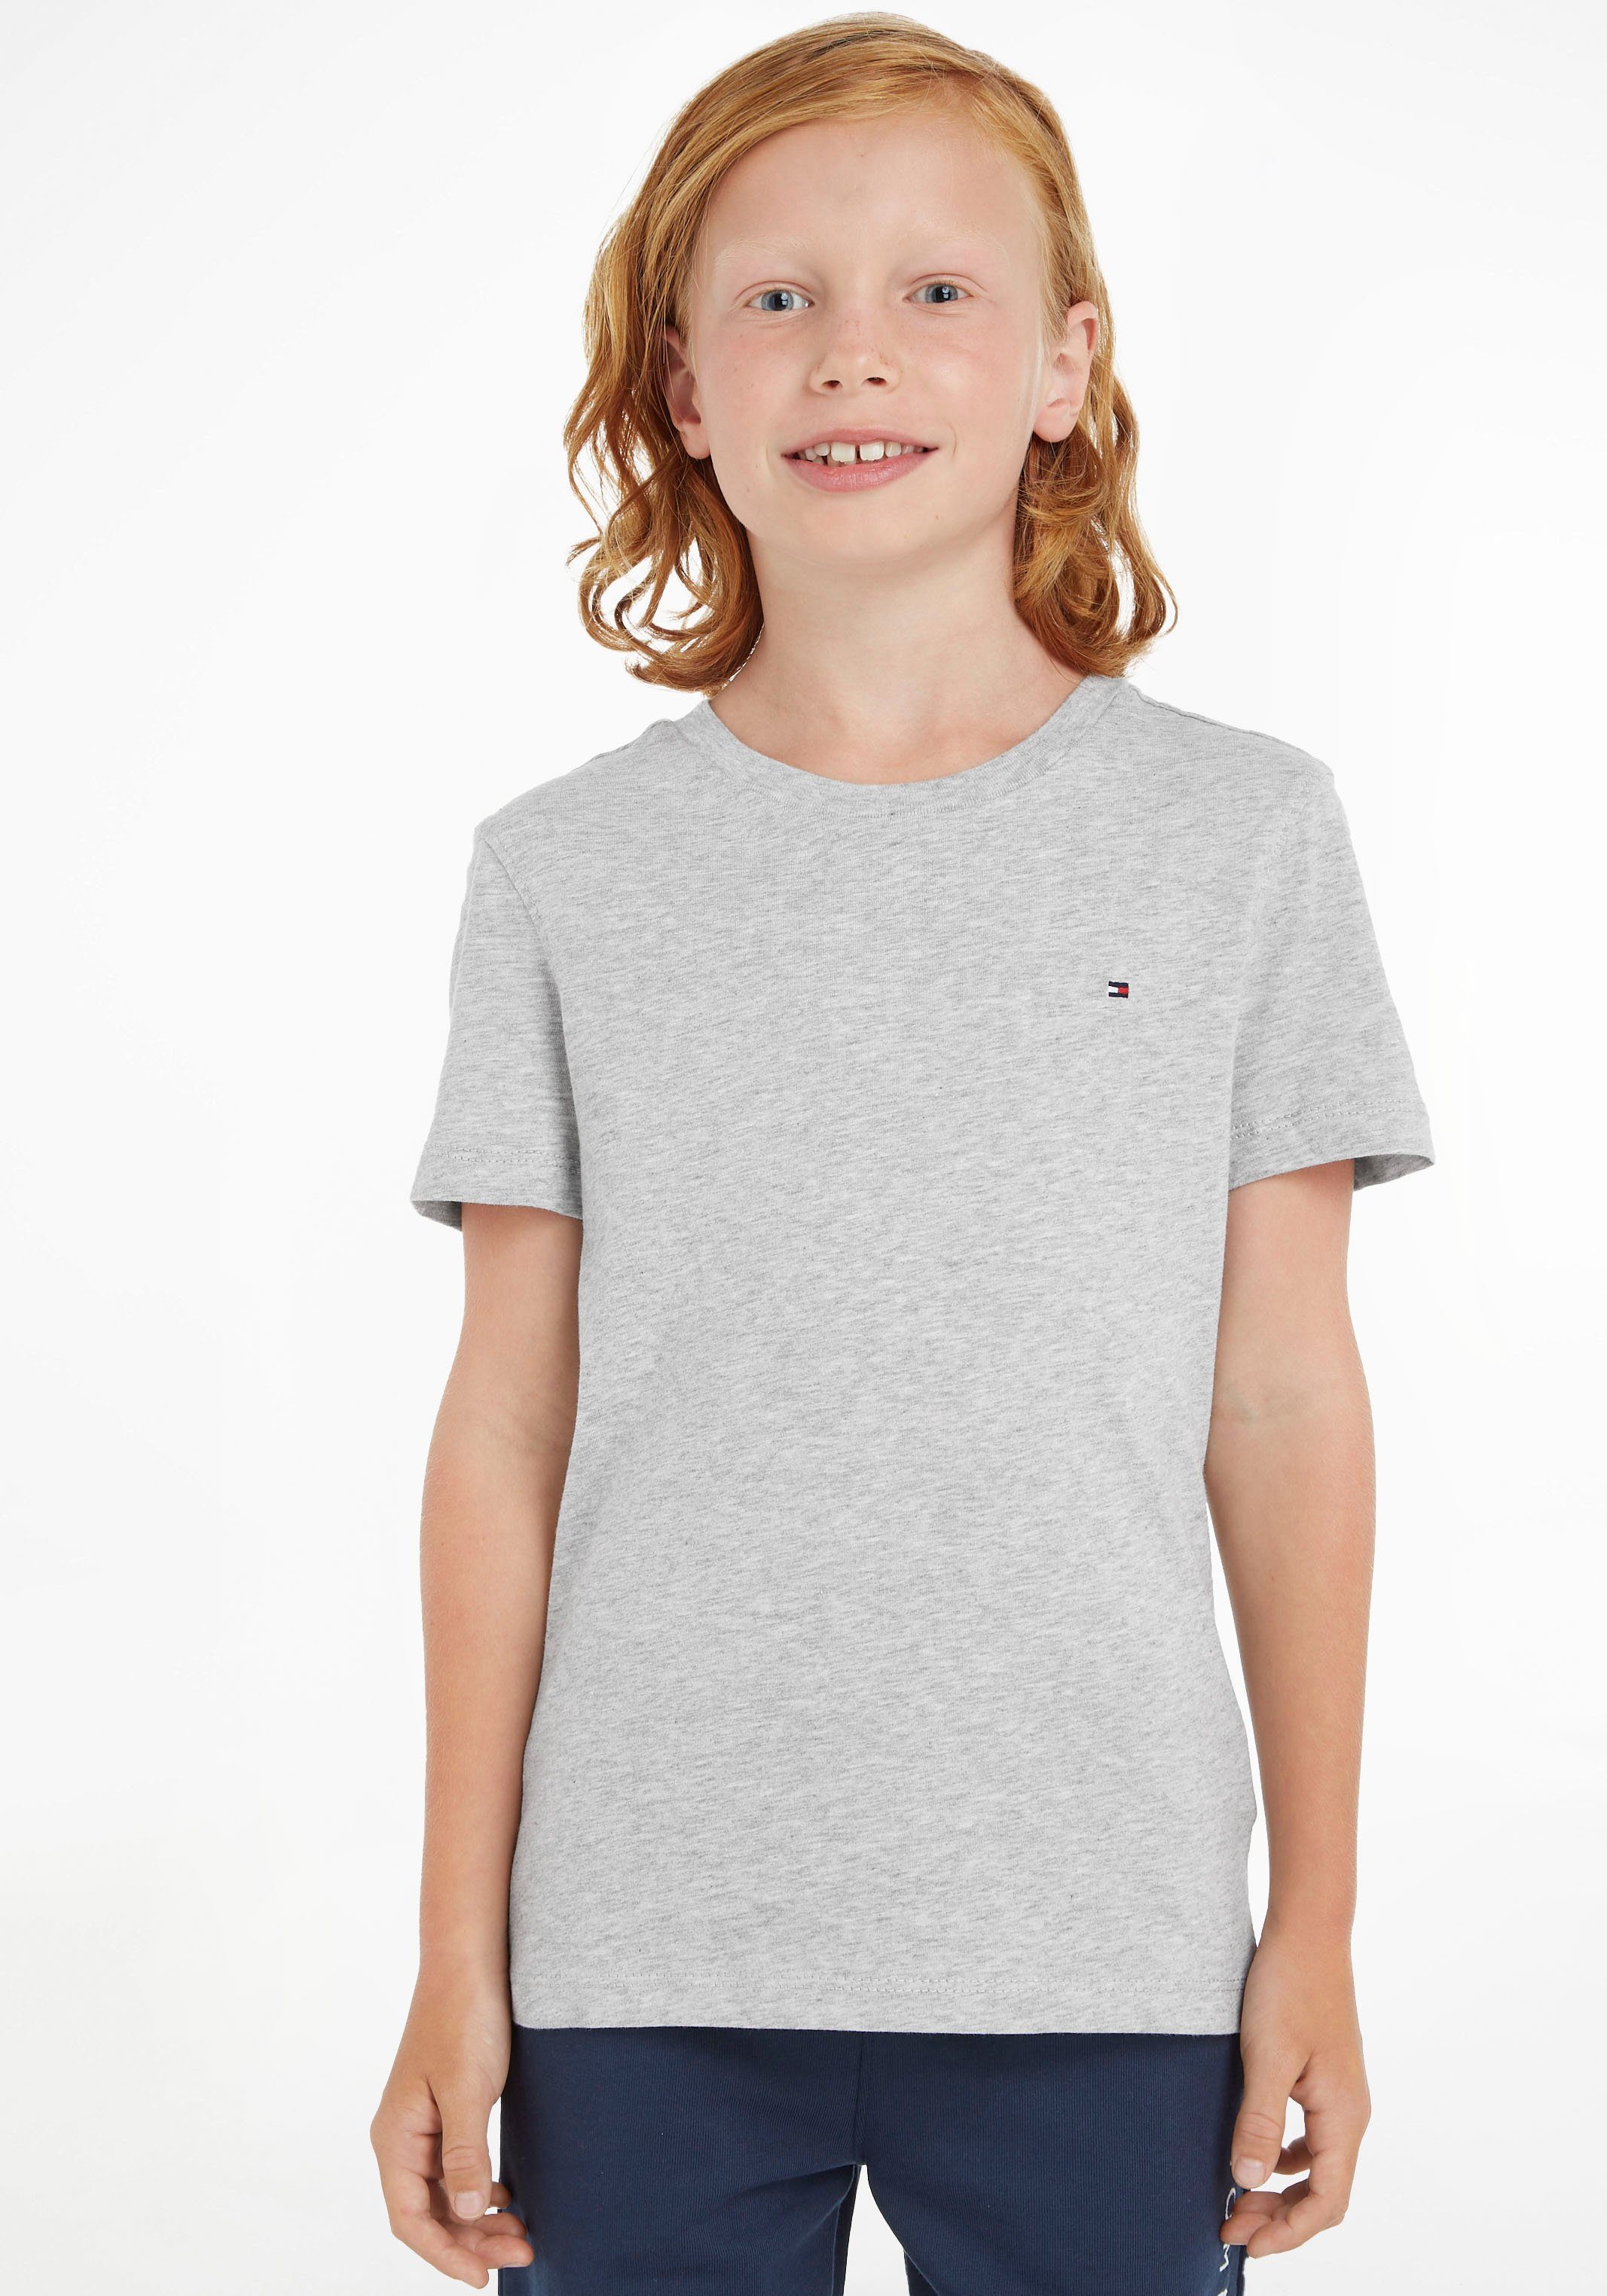 Tommy Hilfiger T-Shirt BOYS BASIC CN KNIT Kinder Kids Junior MiniMe